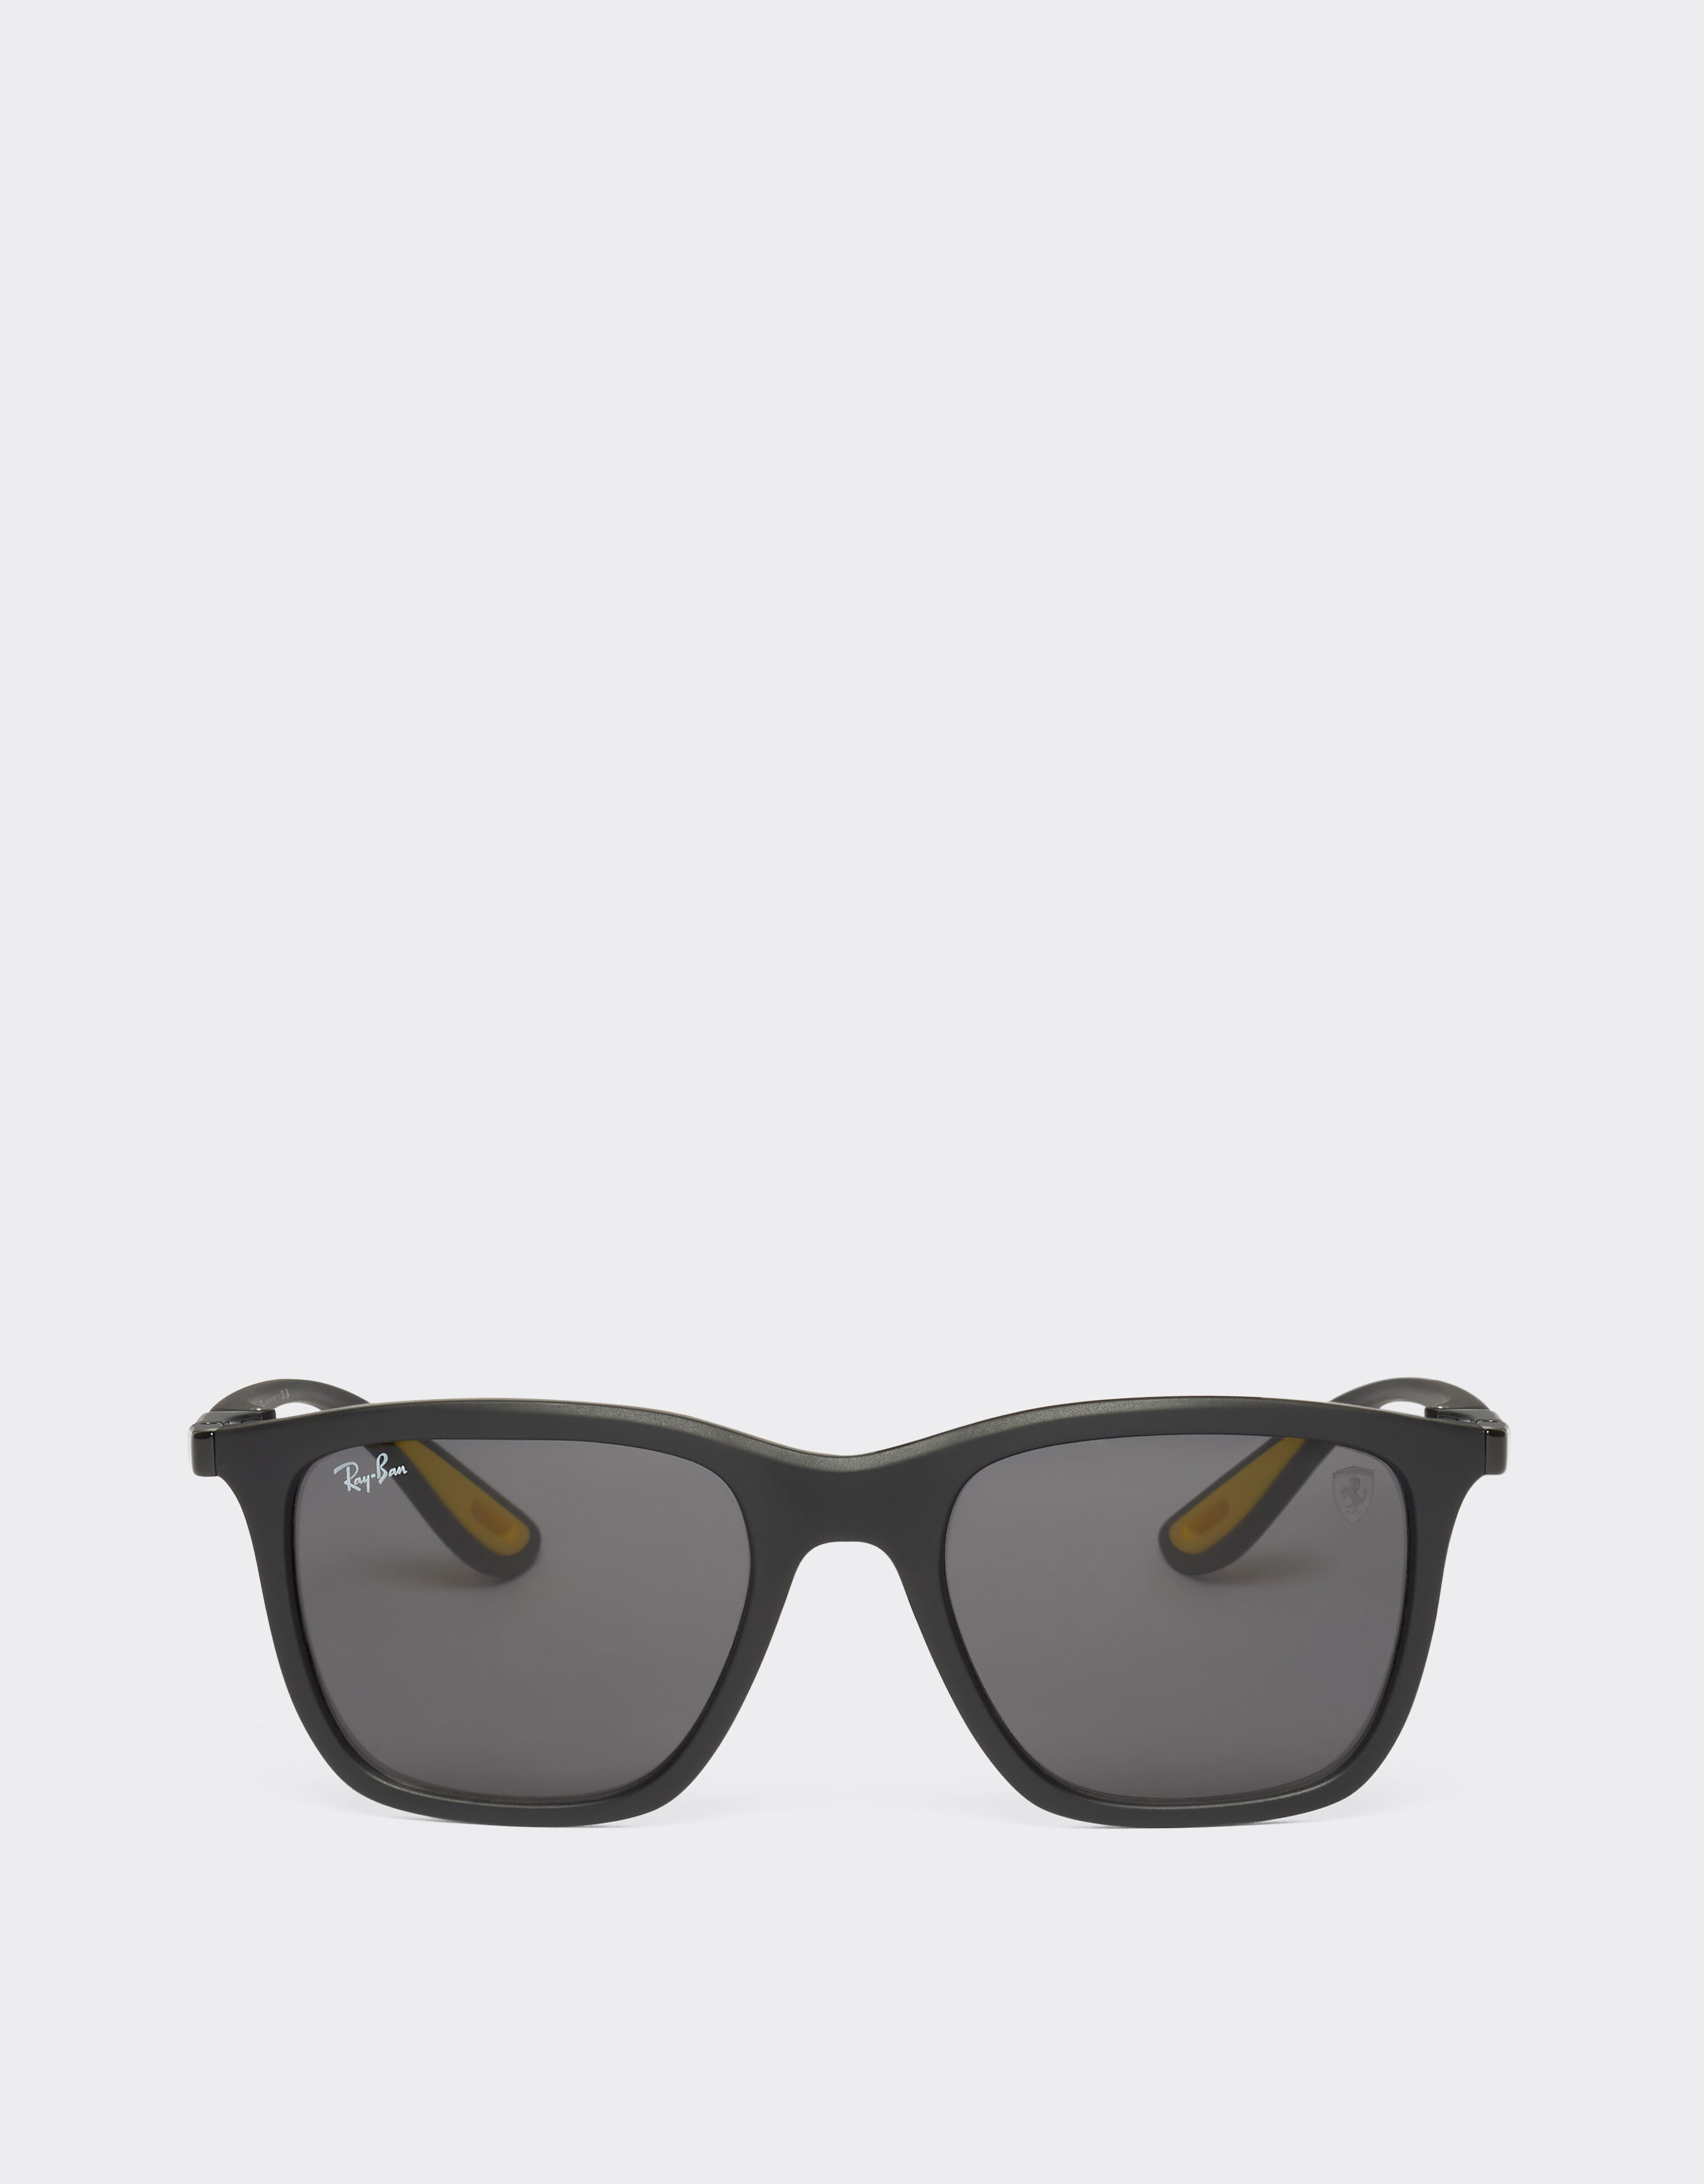 Ferrari Ray-Ban for Scuderia Ferrari 0RB4433M black sunglasses with dark grey lenses Black Matt F1260f